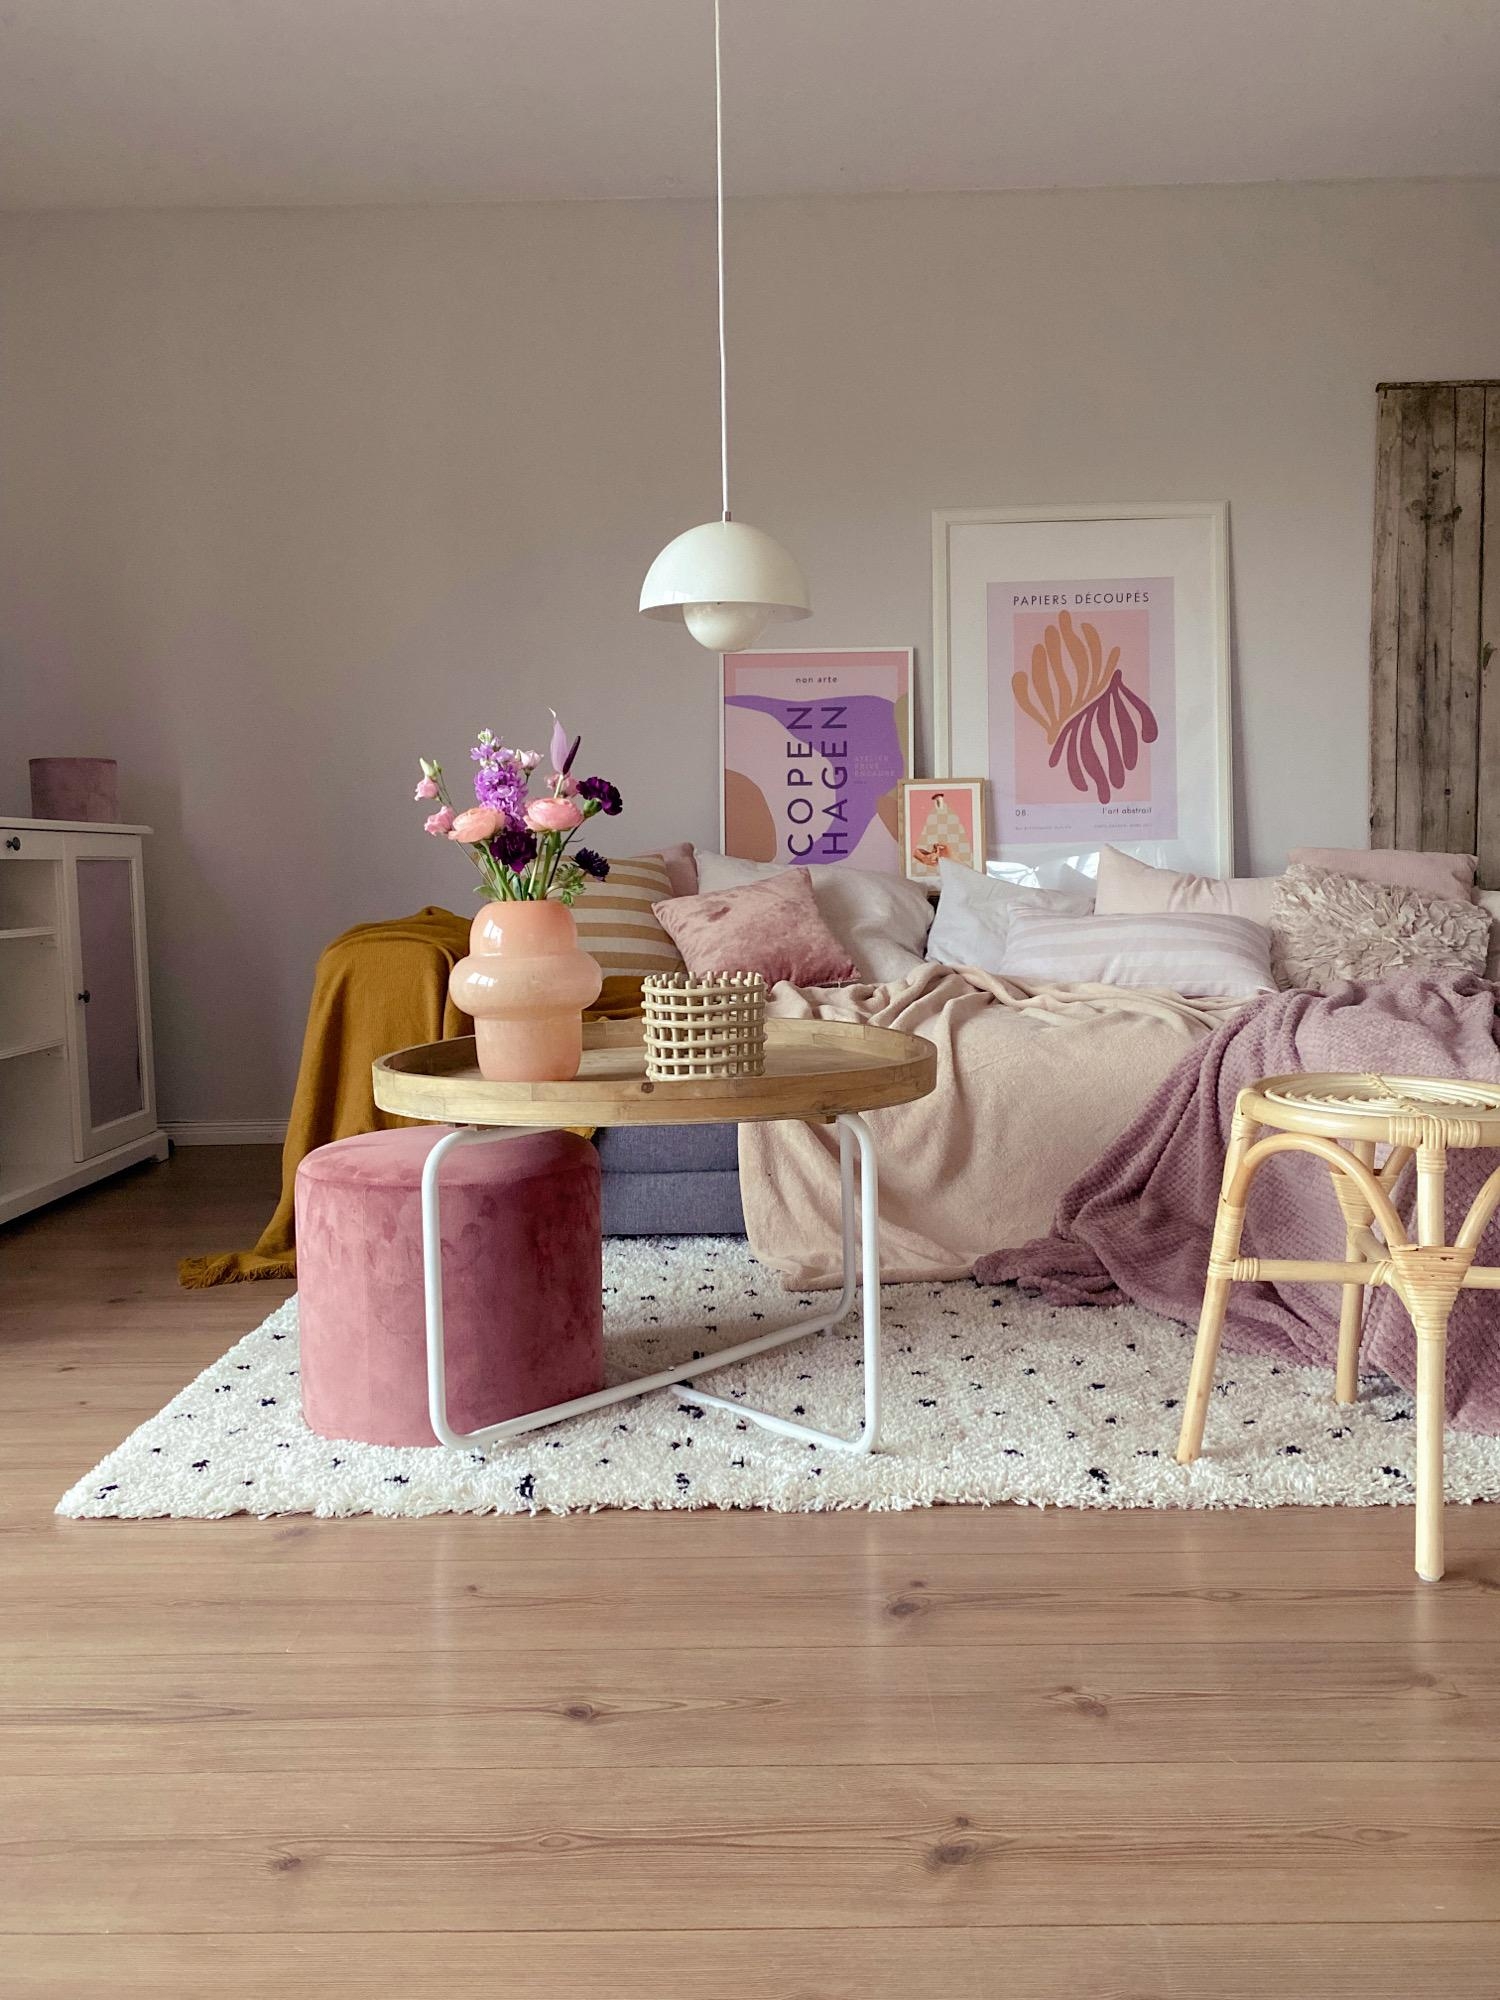 #cozylivingroom#freshflowers#colourful#couchstyle#wohnideen#pastellover#hygge